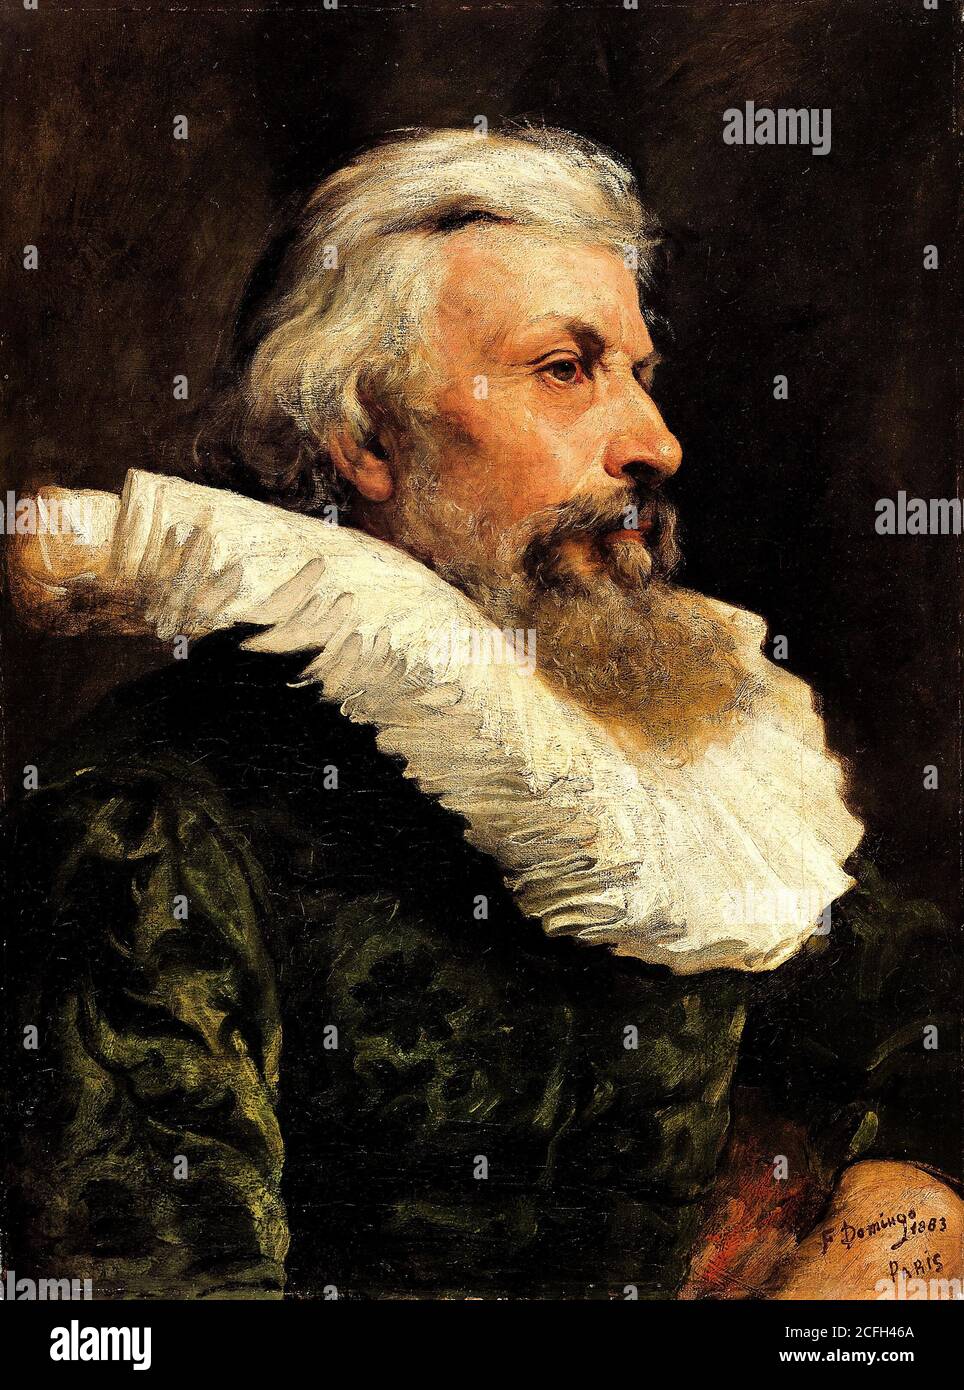 Francisco Domingo Marques, Head of a Gentleman 1883 Oil on canvas, Fundacion Banco Santander, Madrid, Spain. Stock Photo